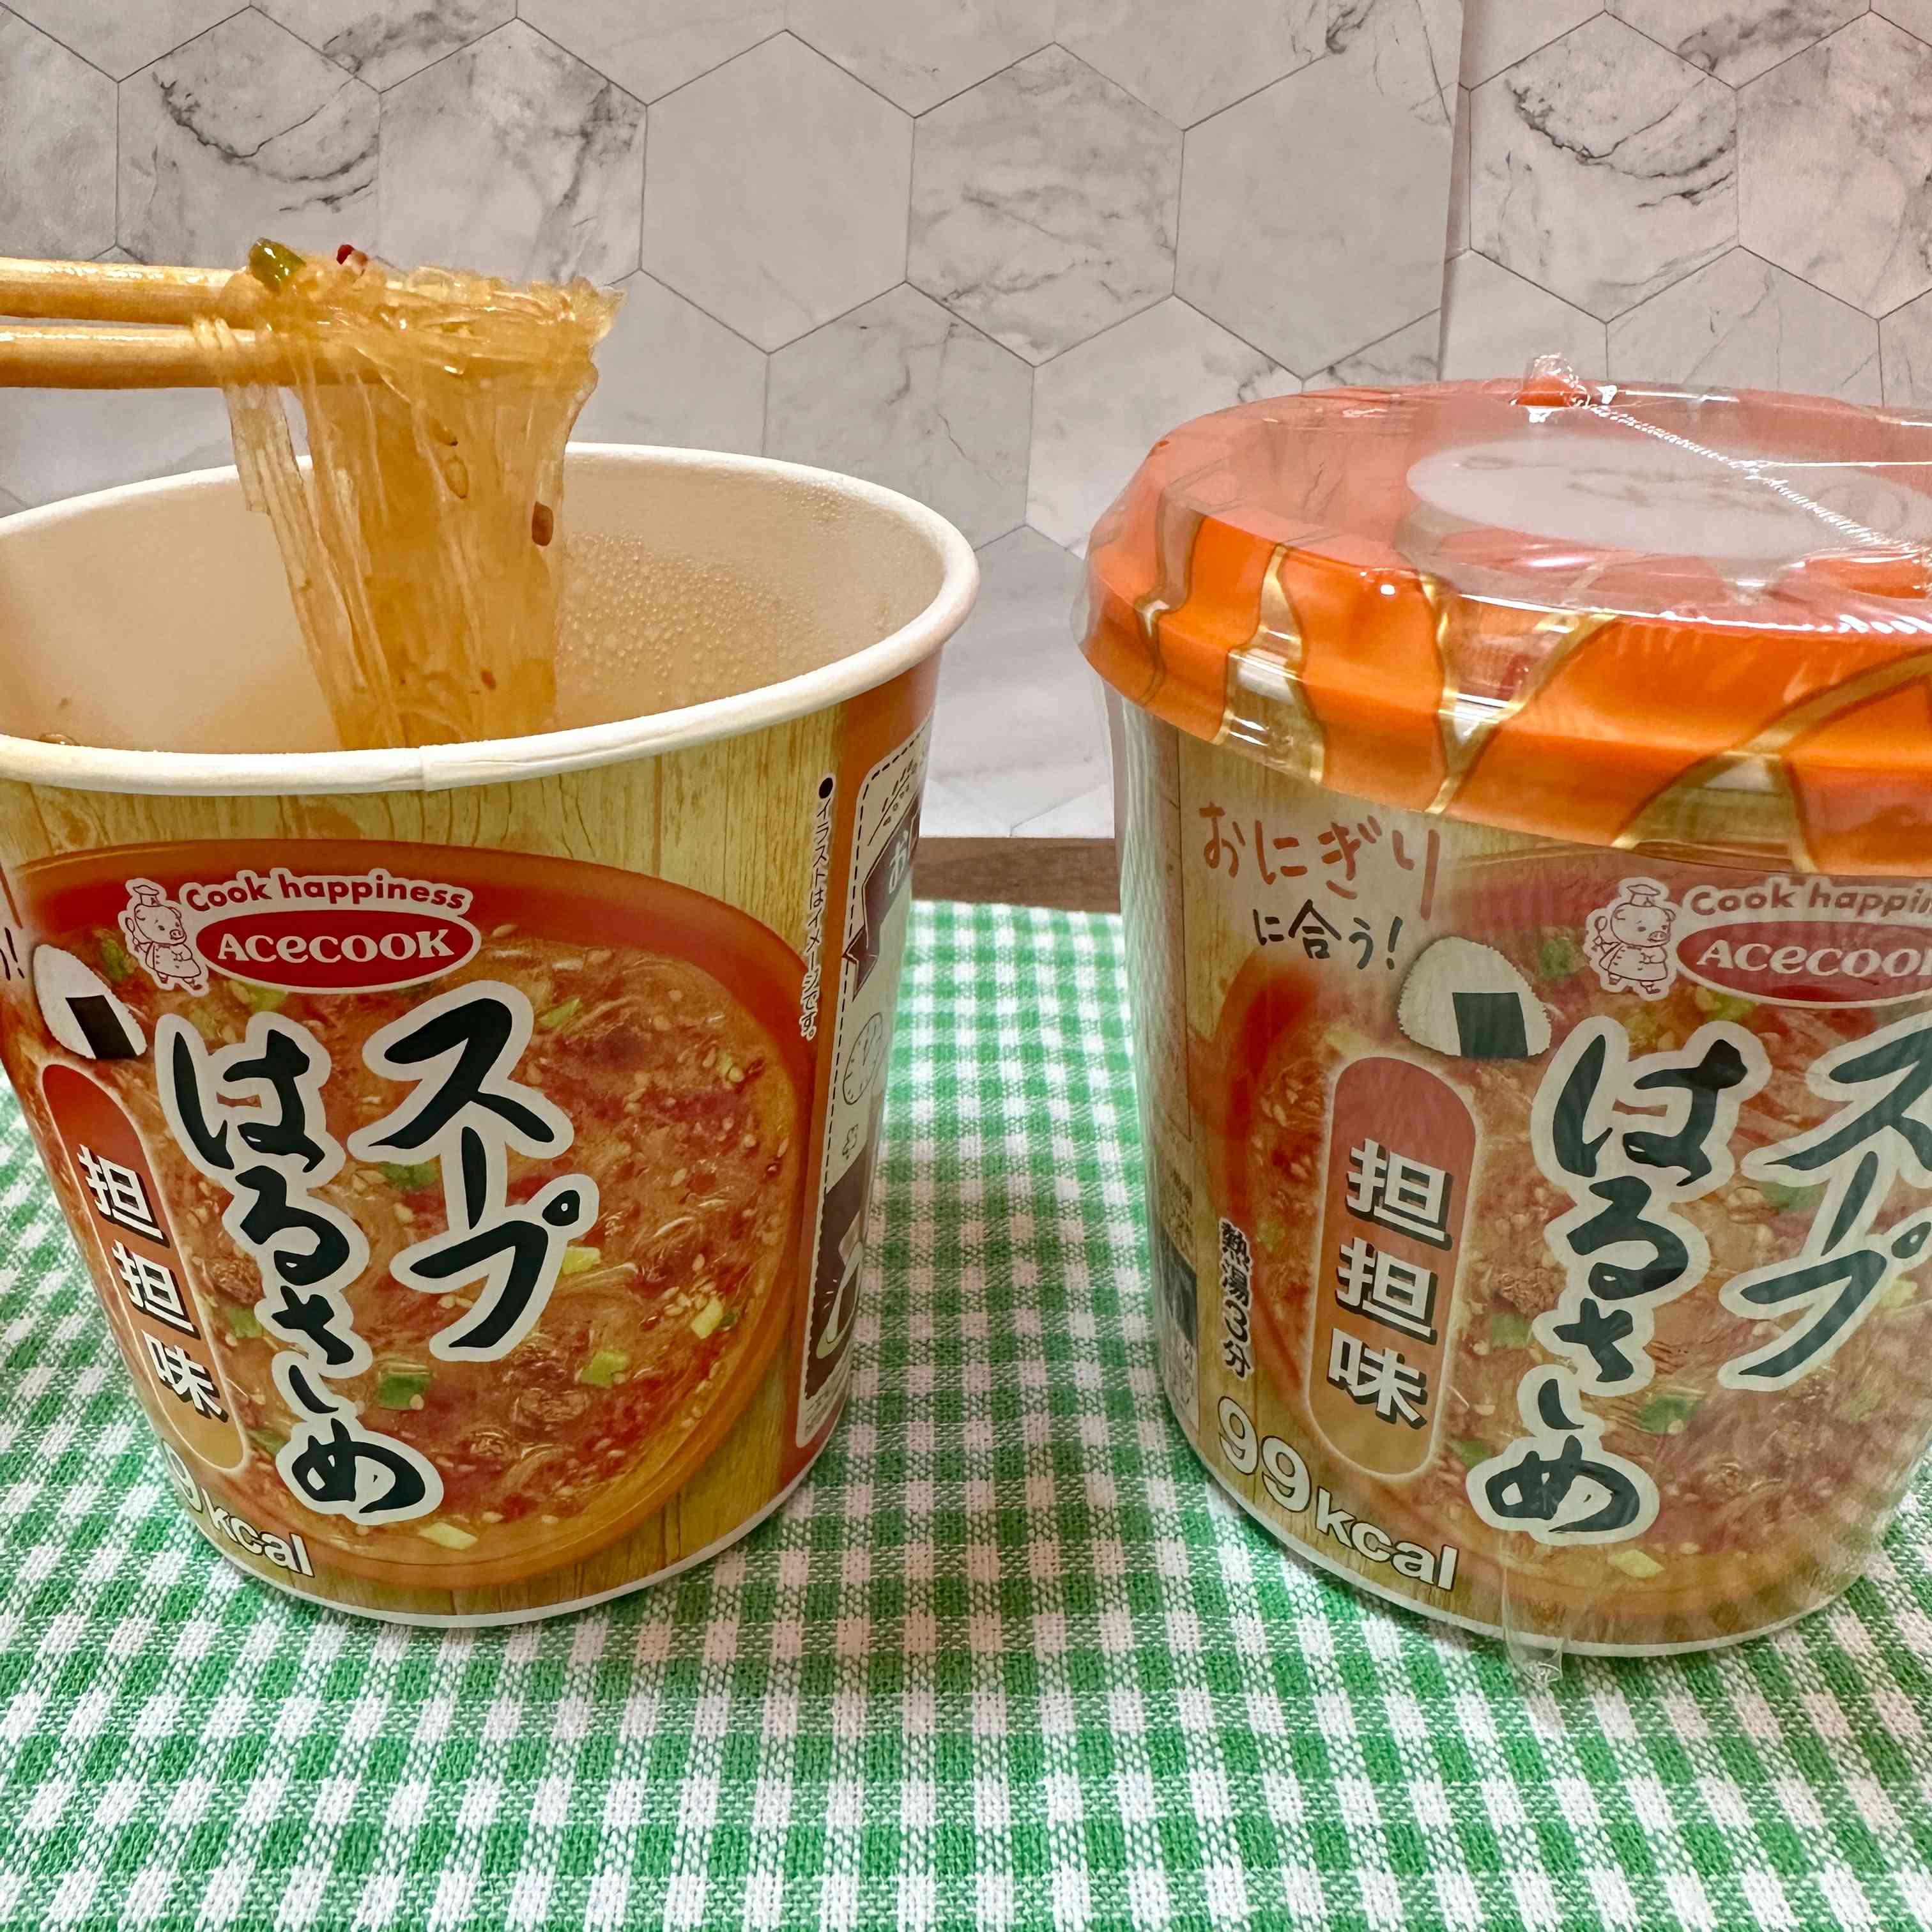 【ACECOOK】Soup Harusame - Tan Tan Flavor　1piece　31ｇ